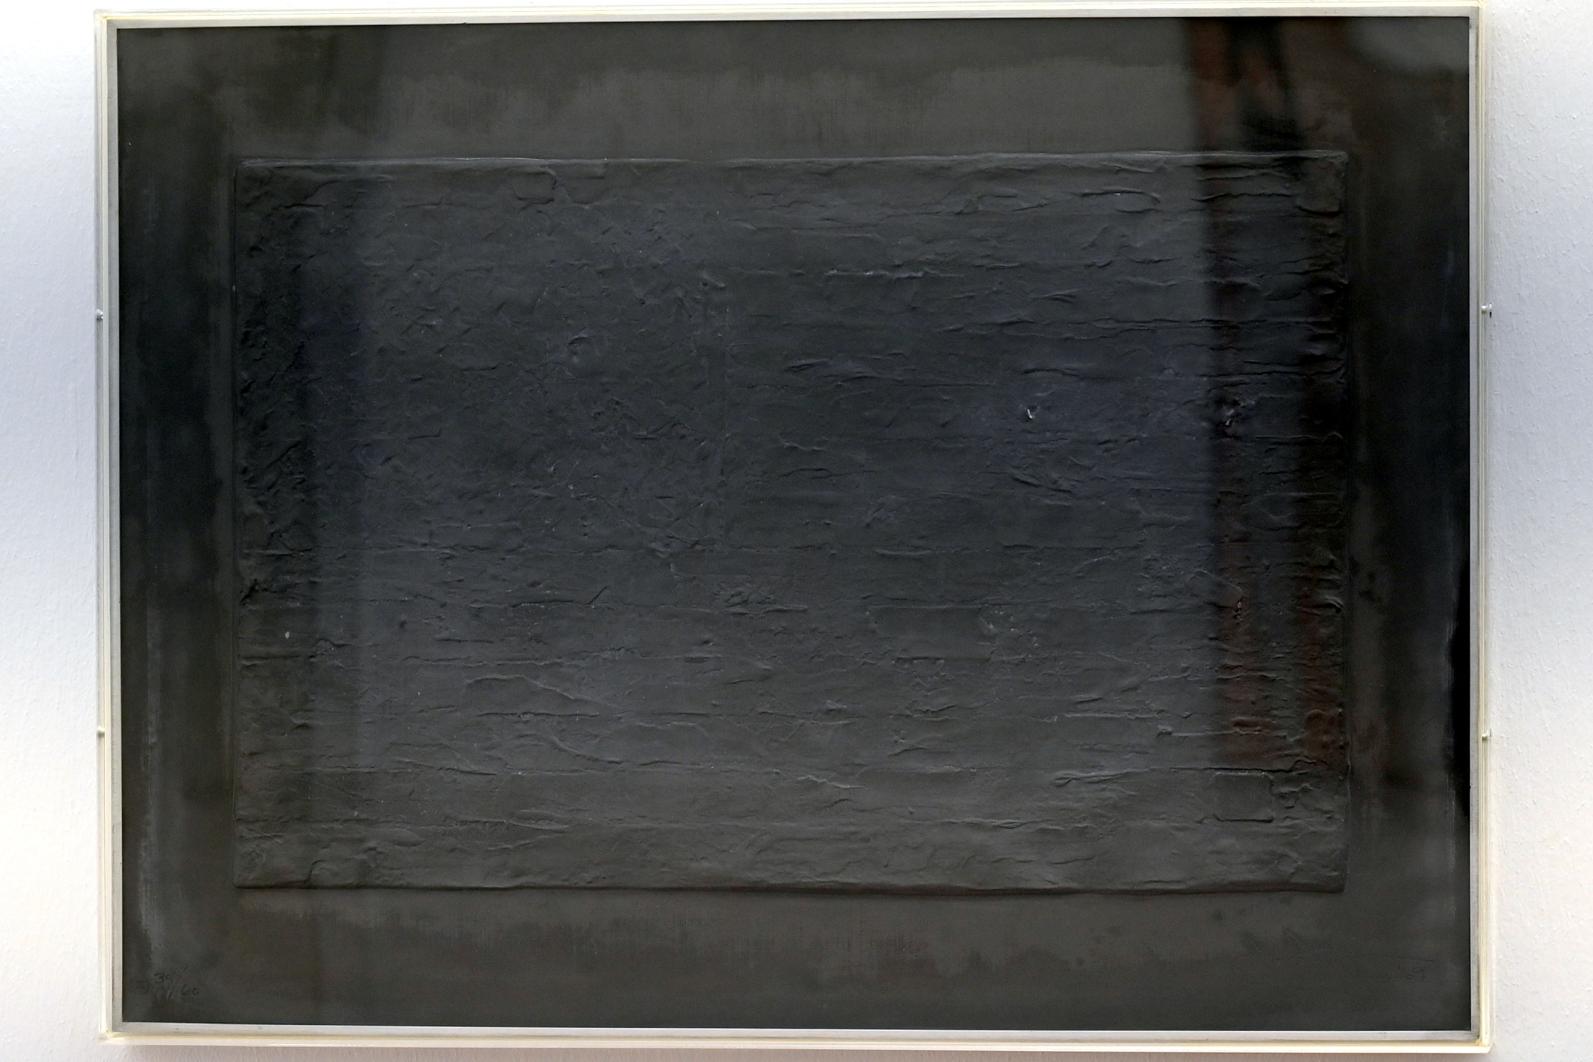 Jasper Johns (1954–1969), Fahne, Köln, Museum Ludwig, 01.14, 1969